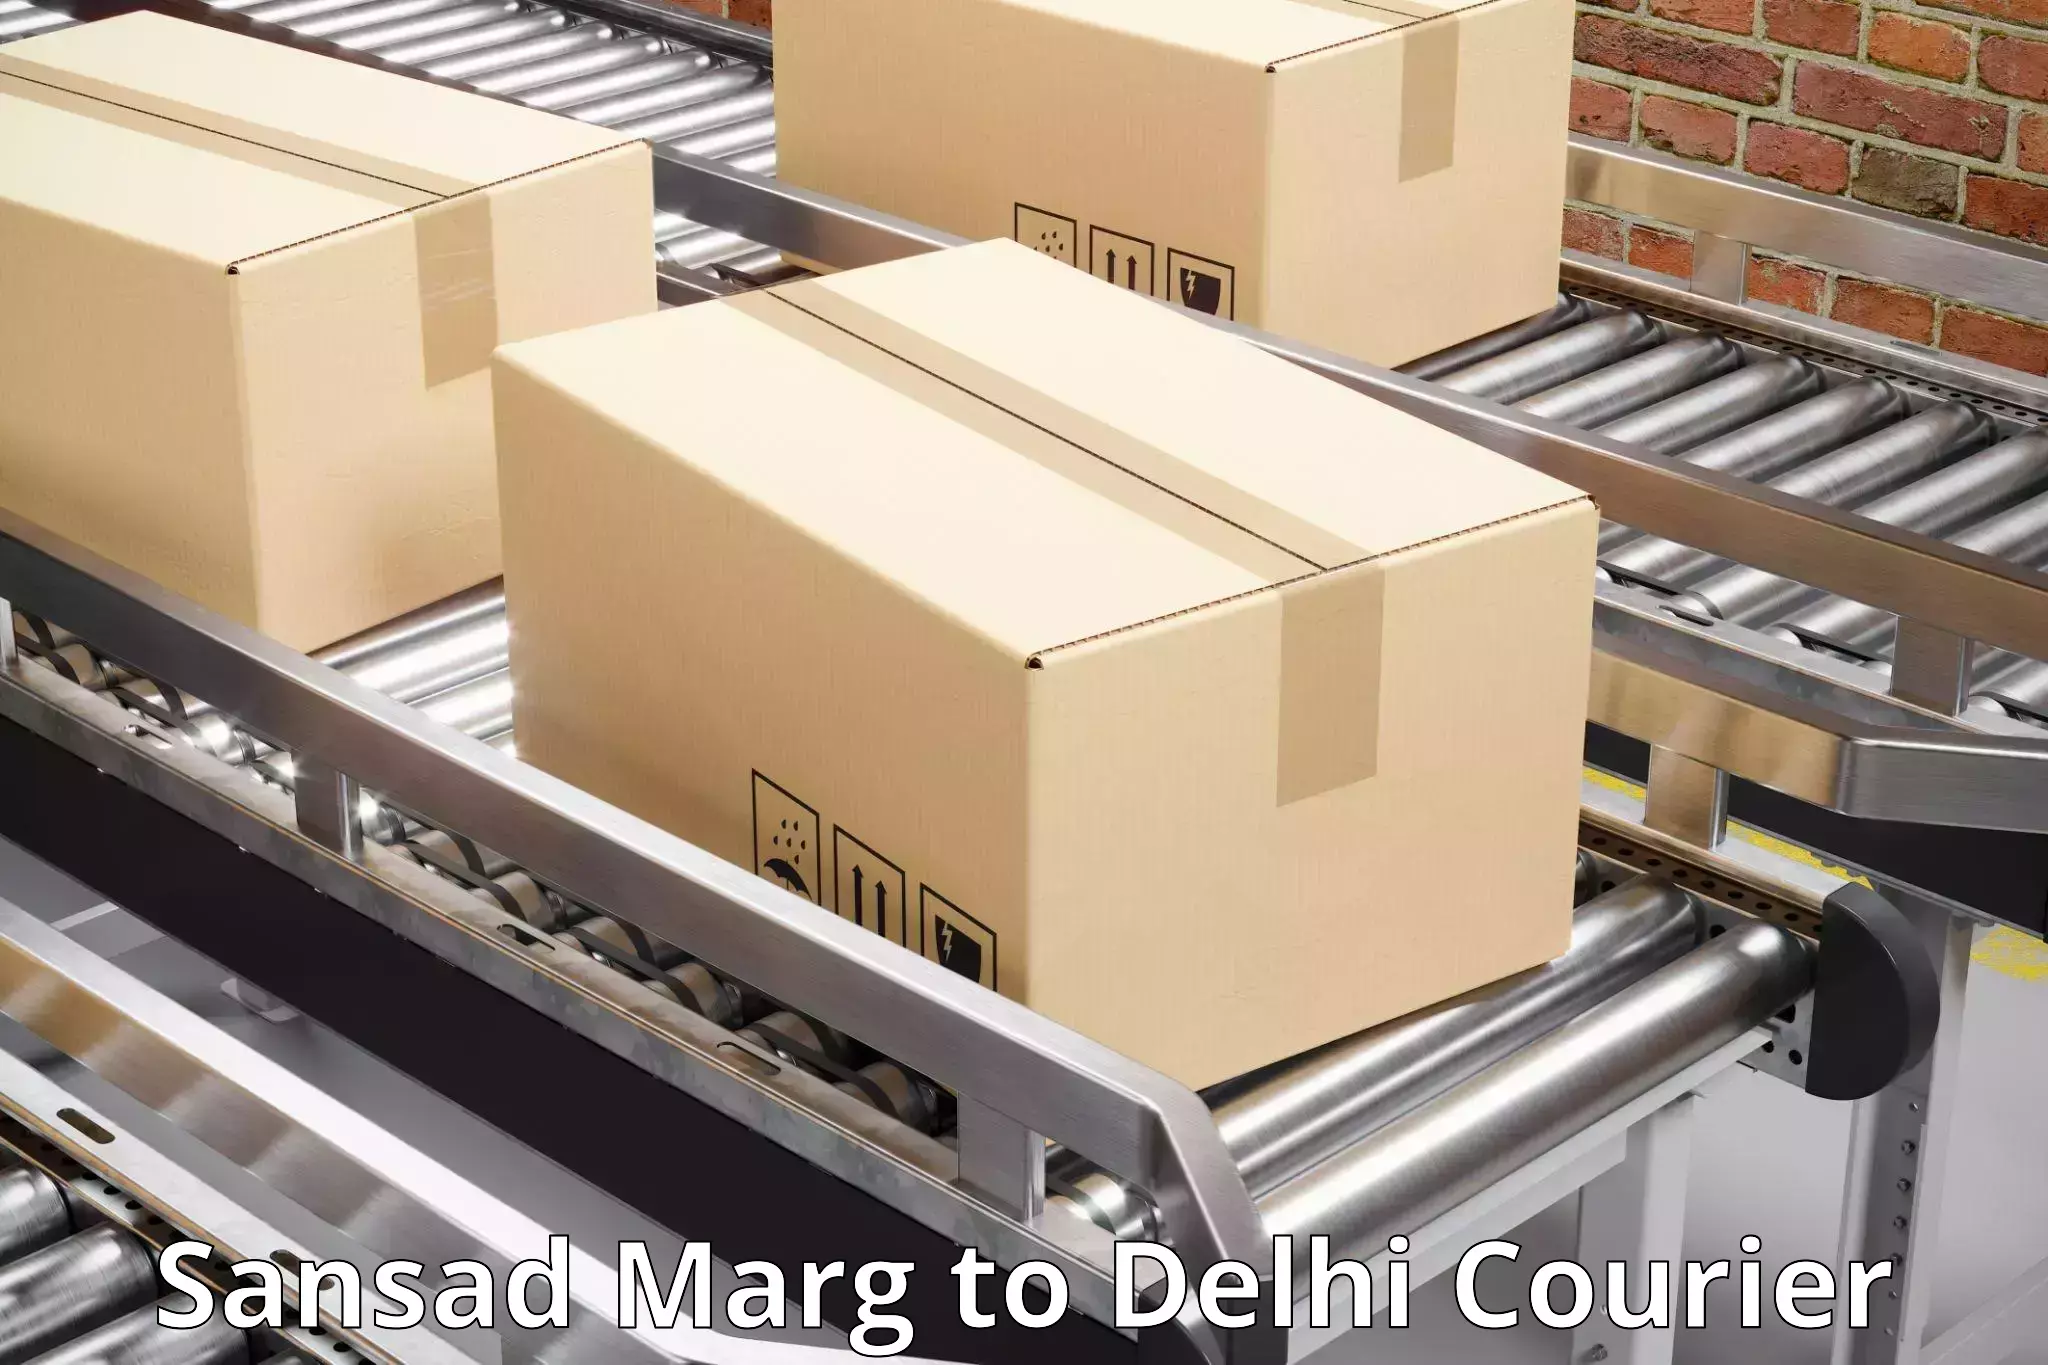 Expedited shipping methods Sansad Marg to NCR